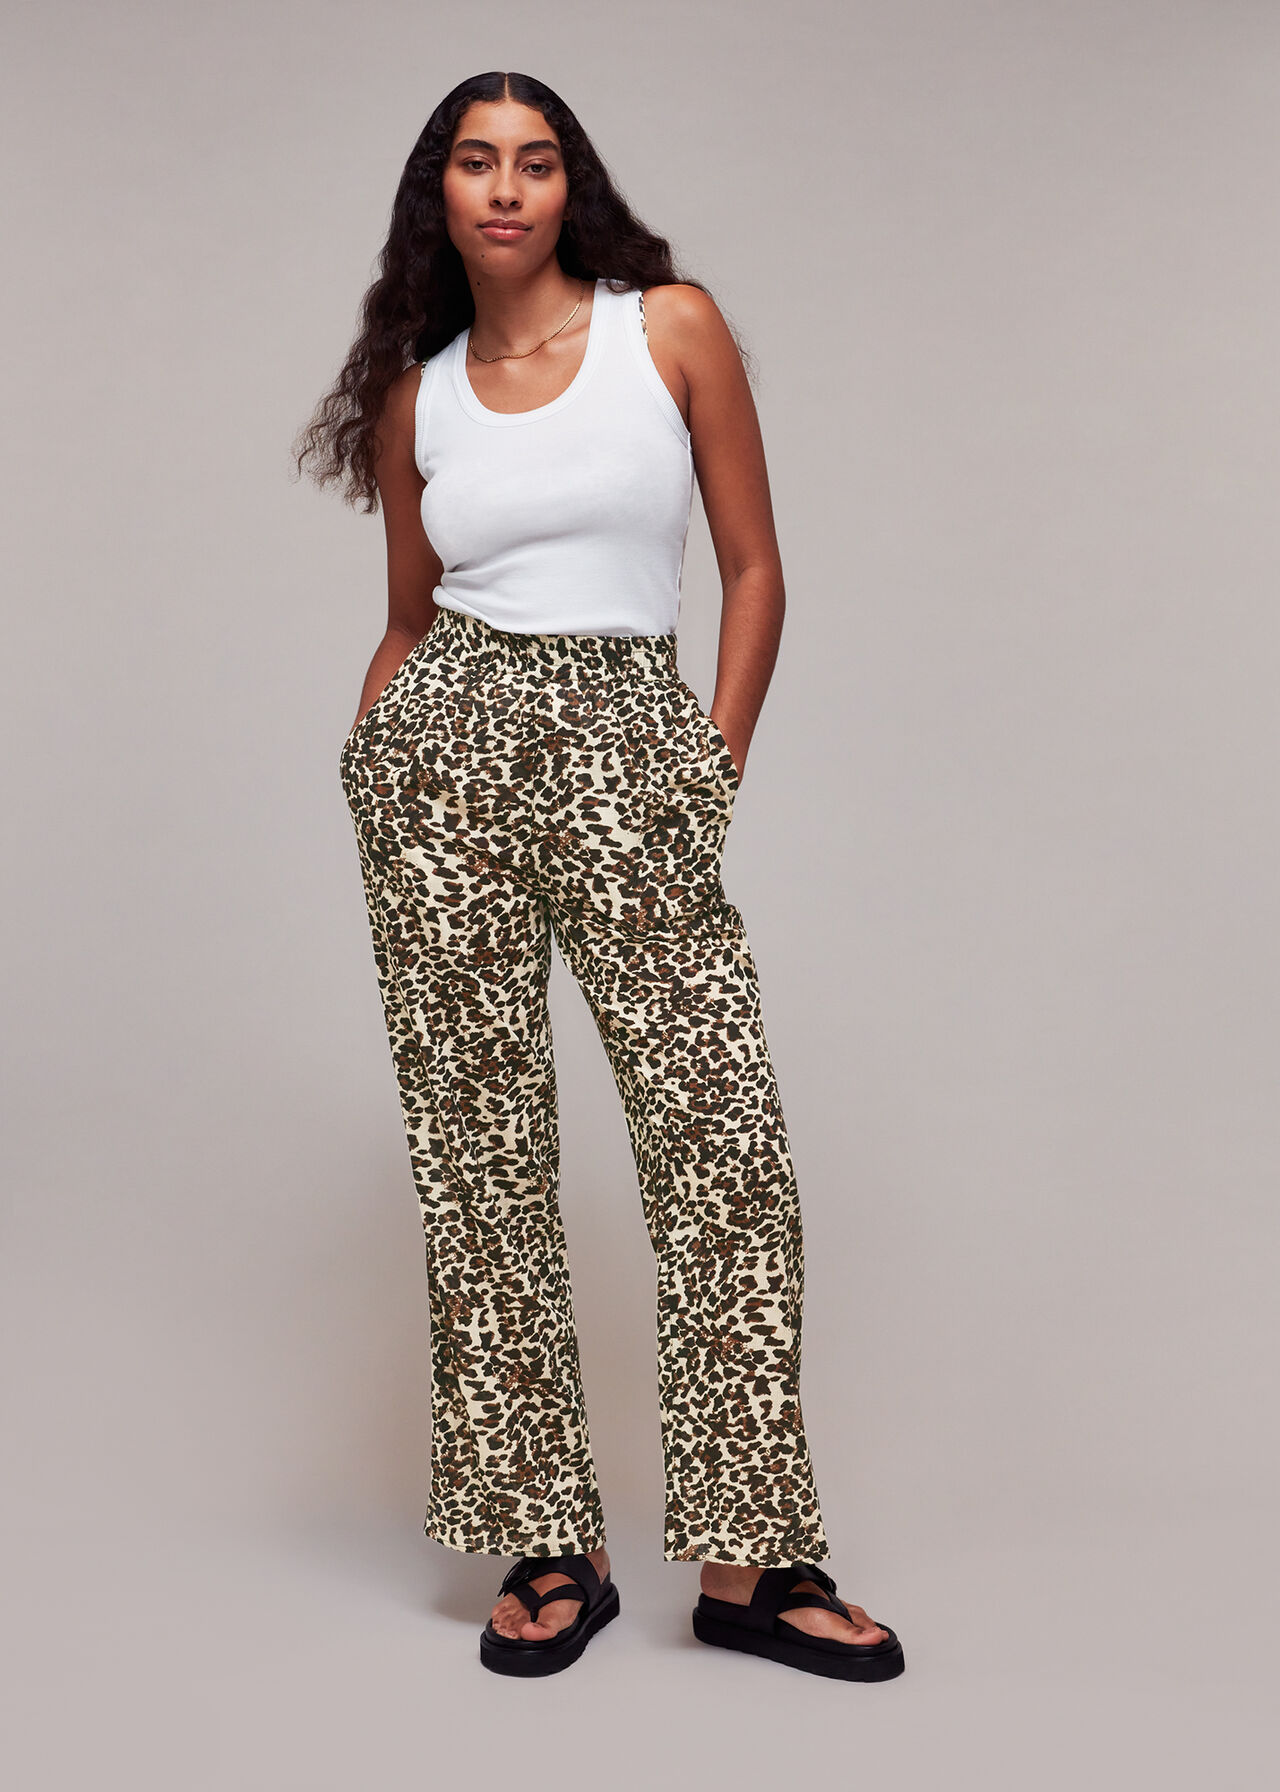 Leopard Print Animal Print Beach Trouser | WHISTLES |